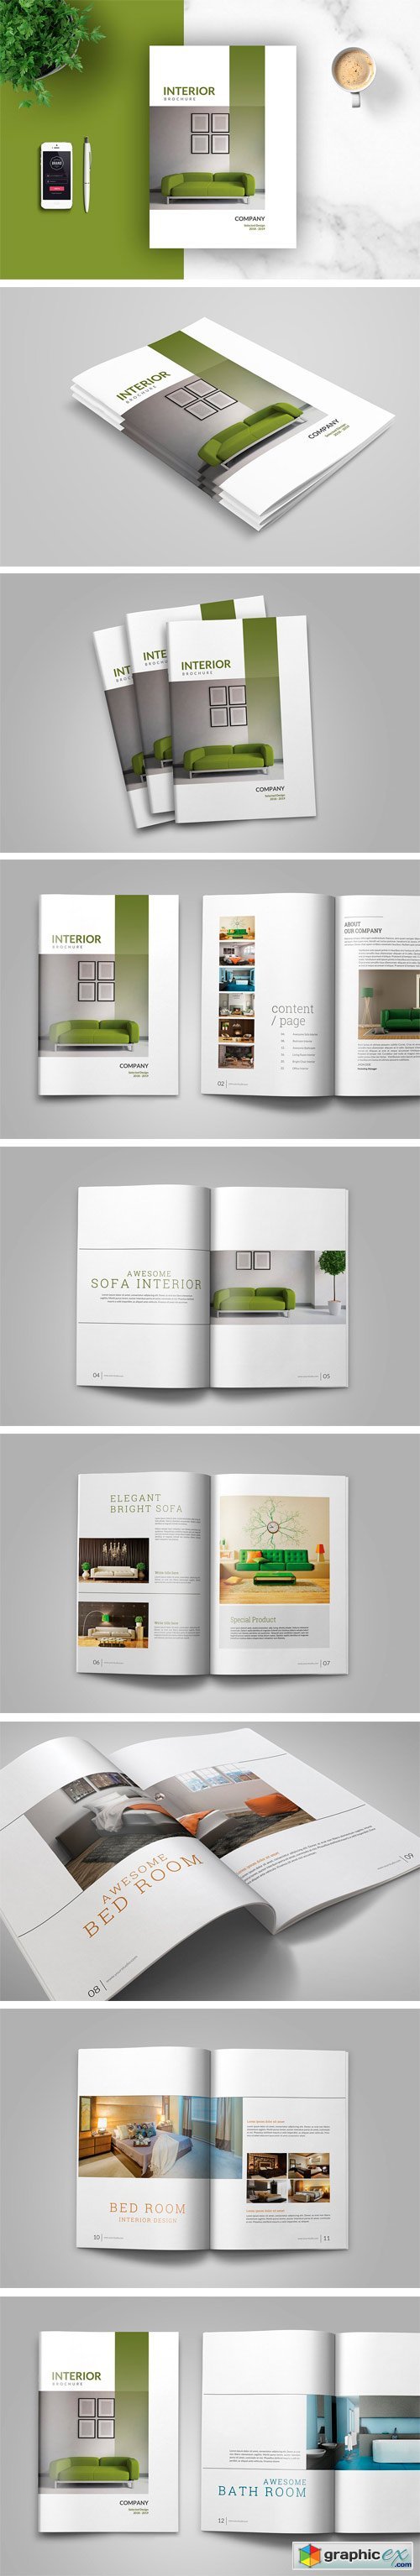 PSD - Interior Brochures / Catalogs